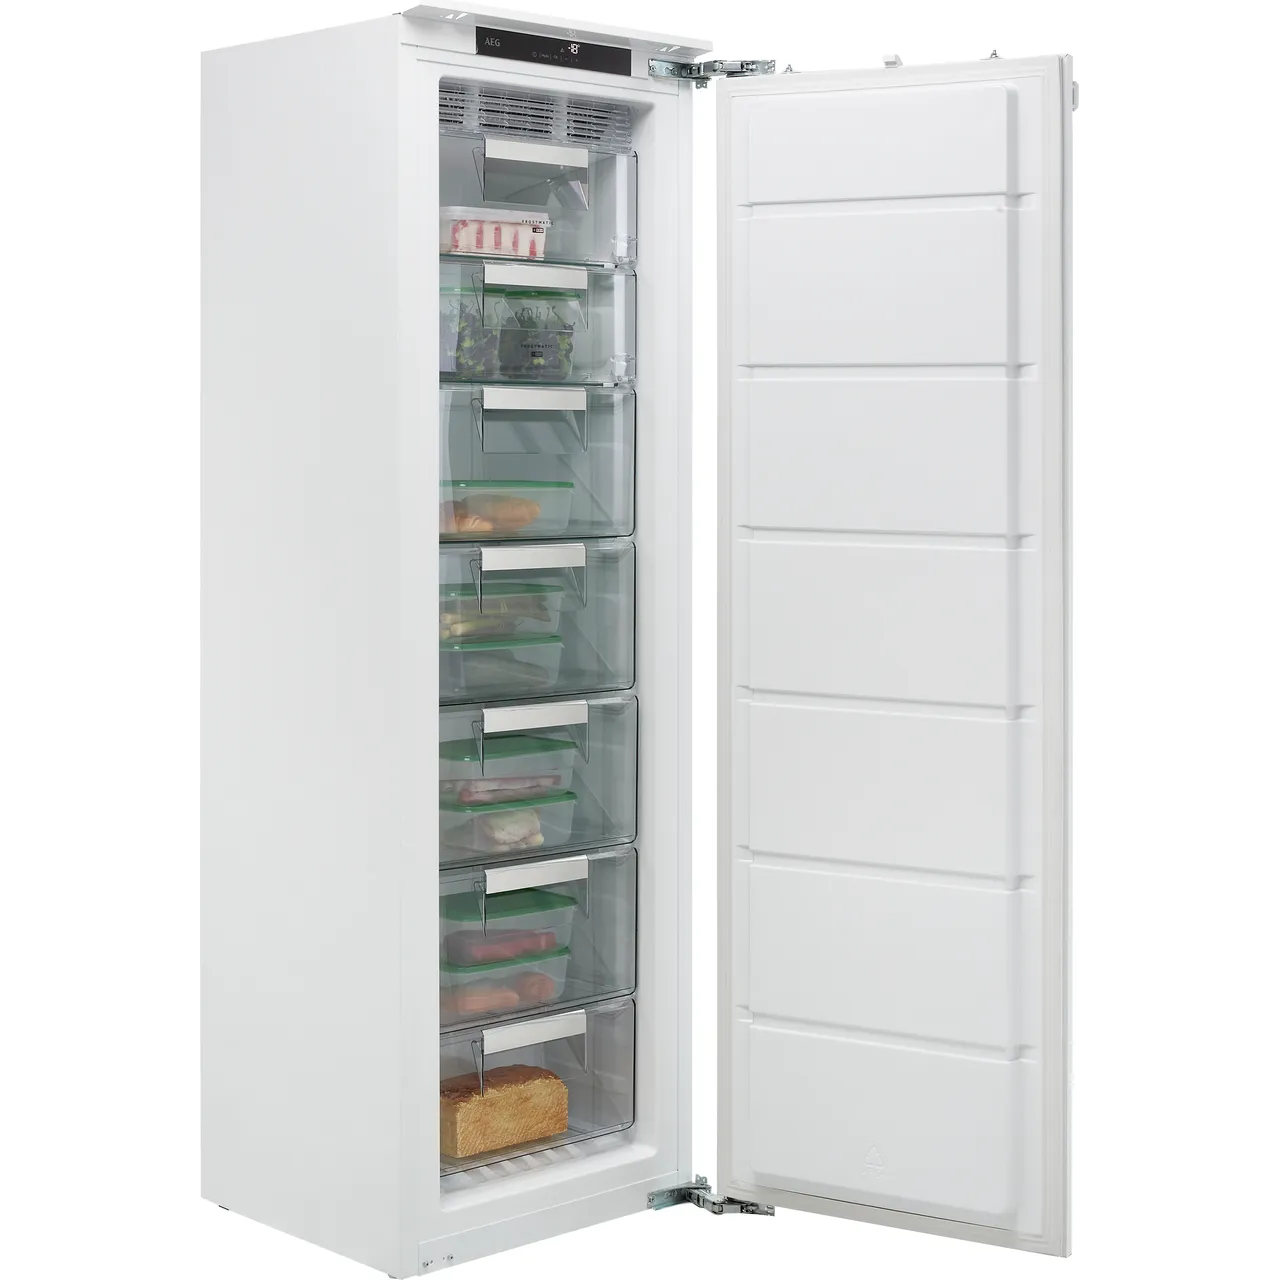 AEG ABB818F6NC Integrated Freezer White